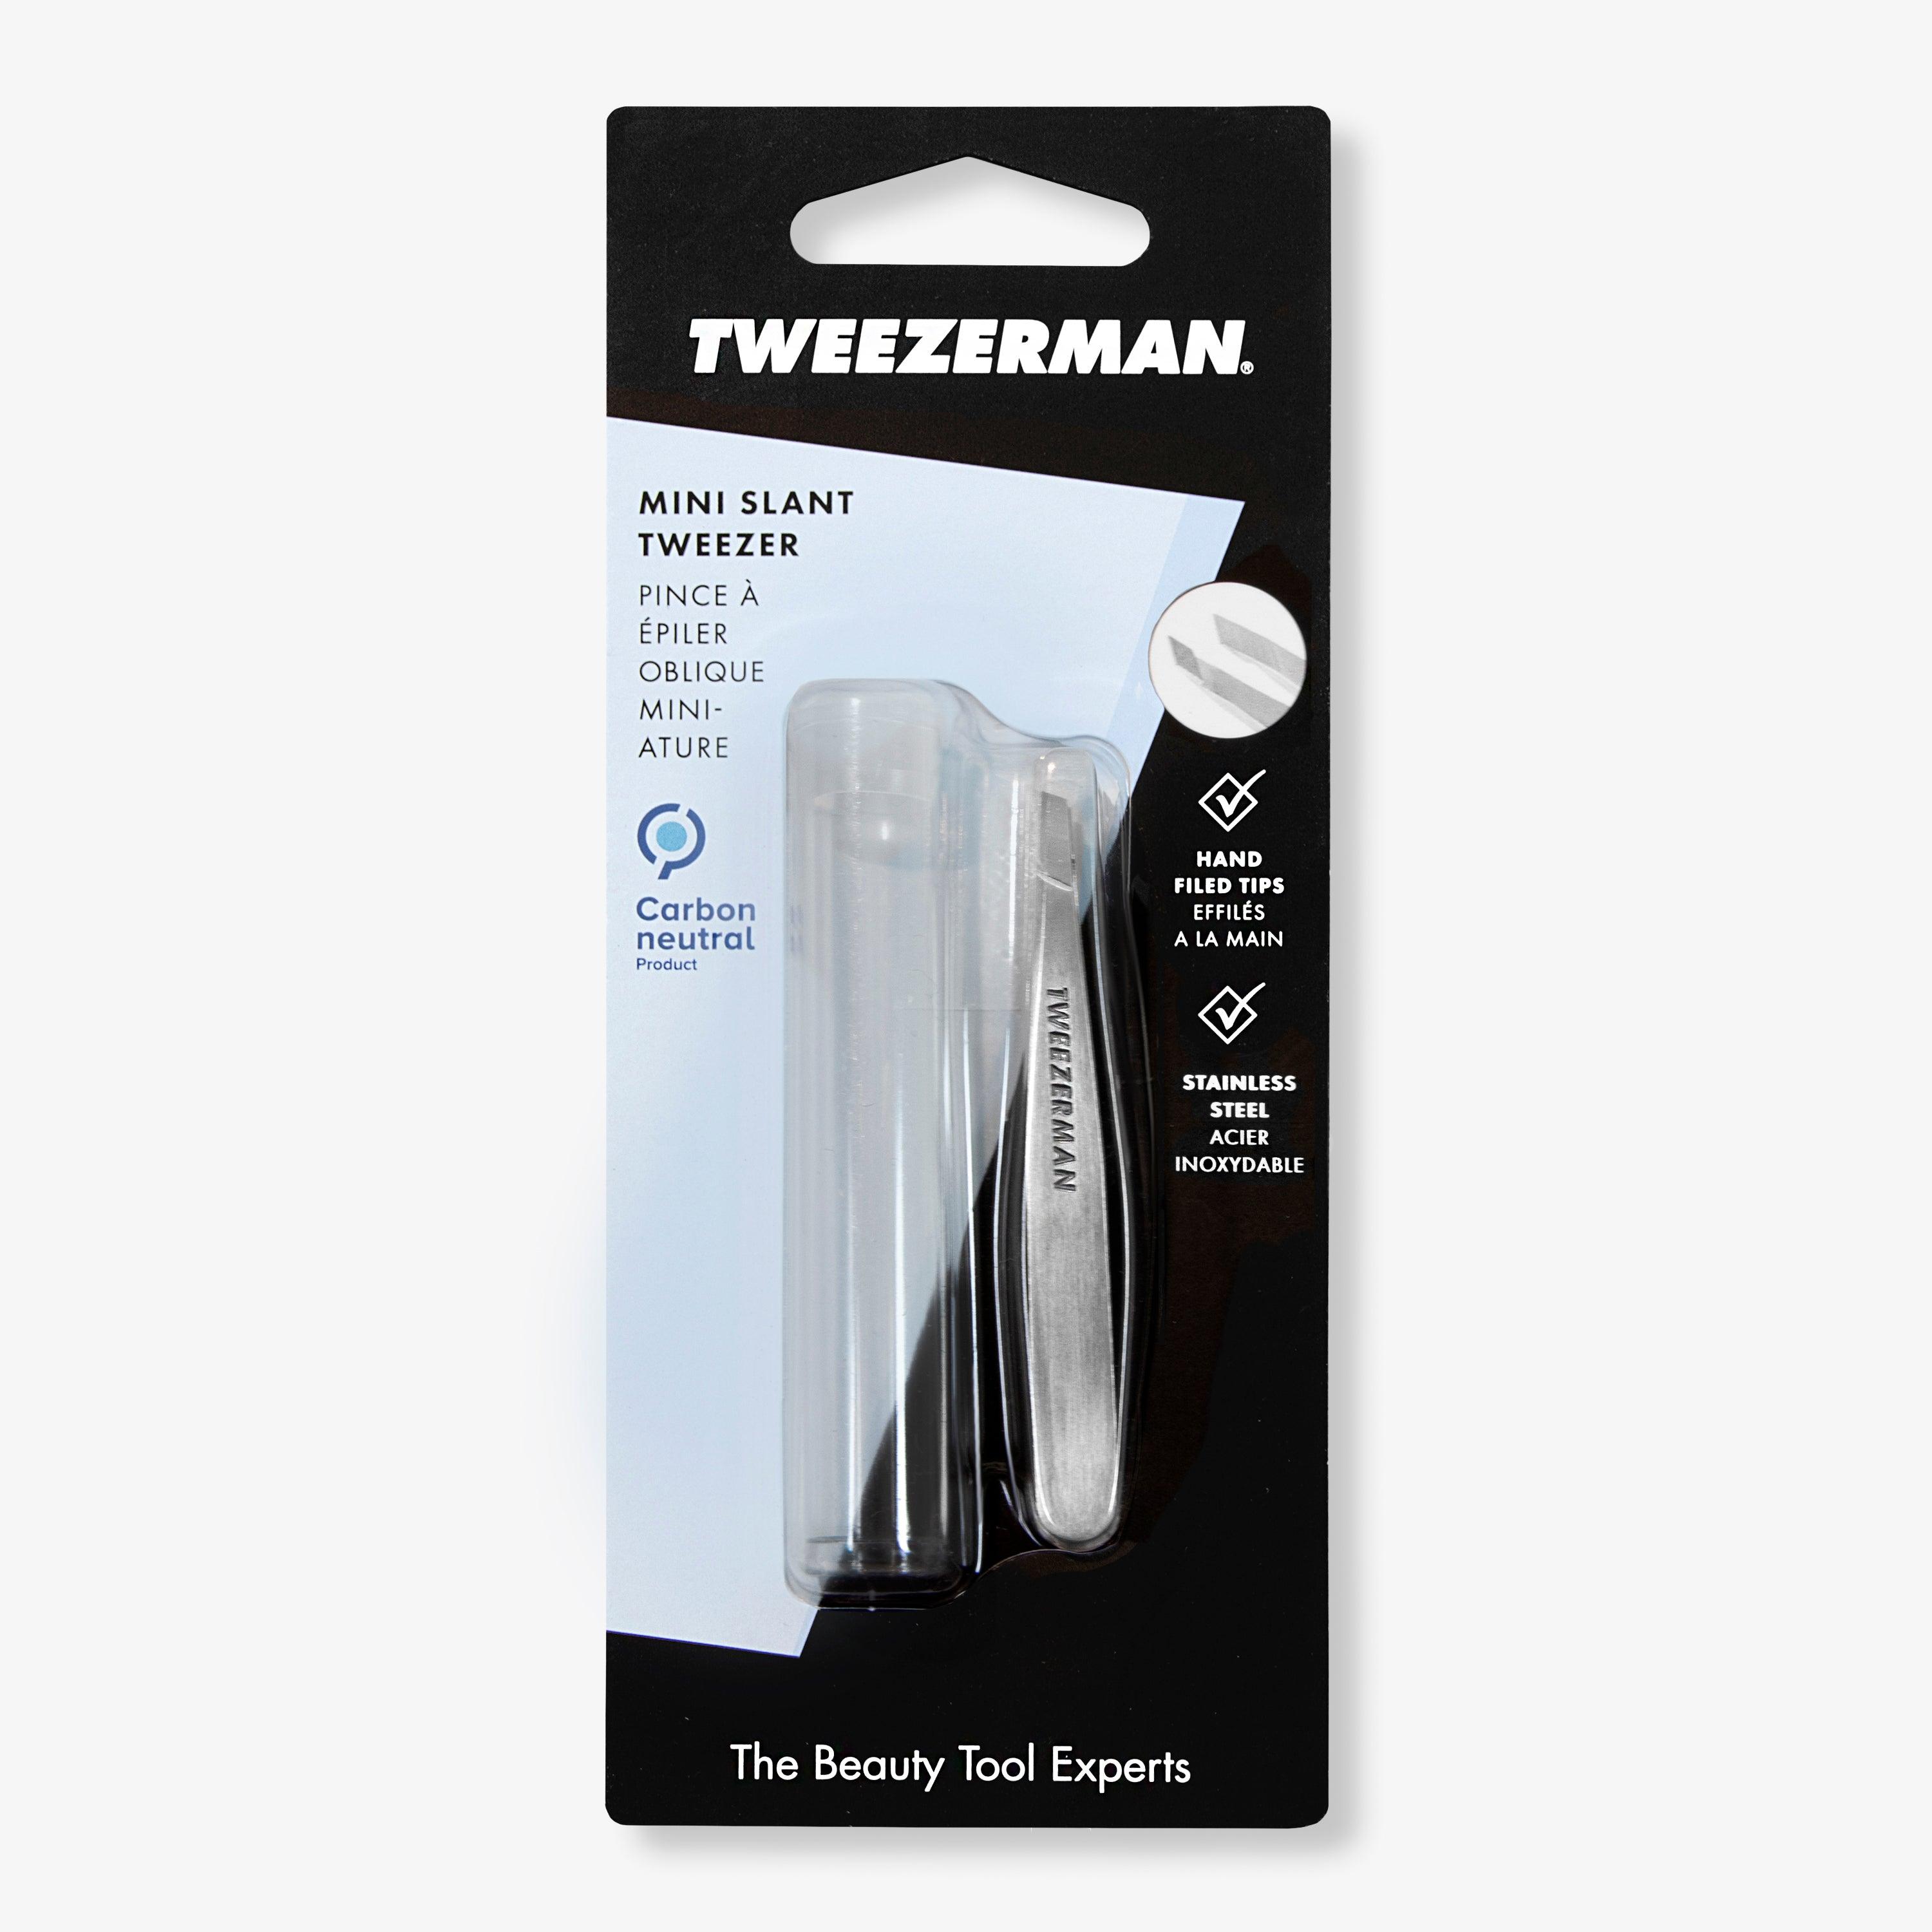 Tweezerman - Mini Slant tweezer RSV - SerumGeeks